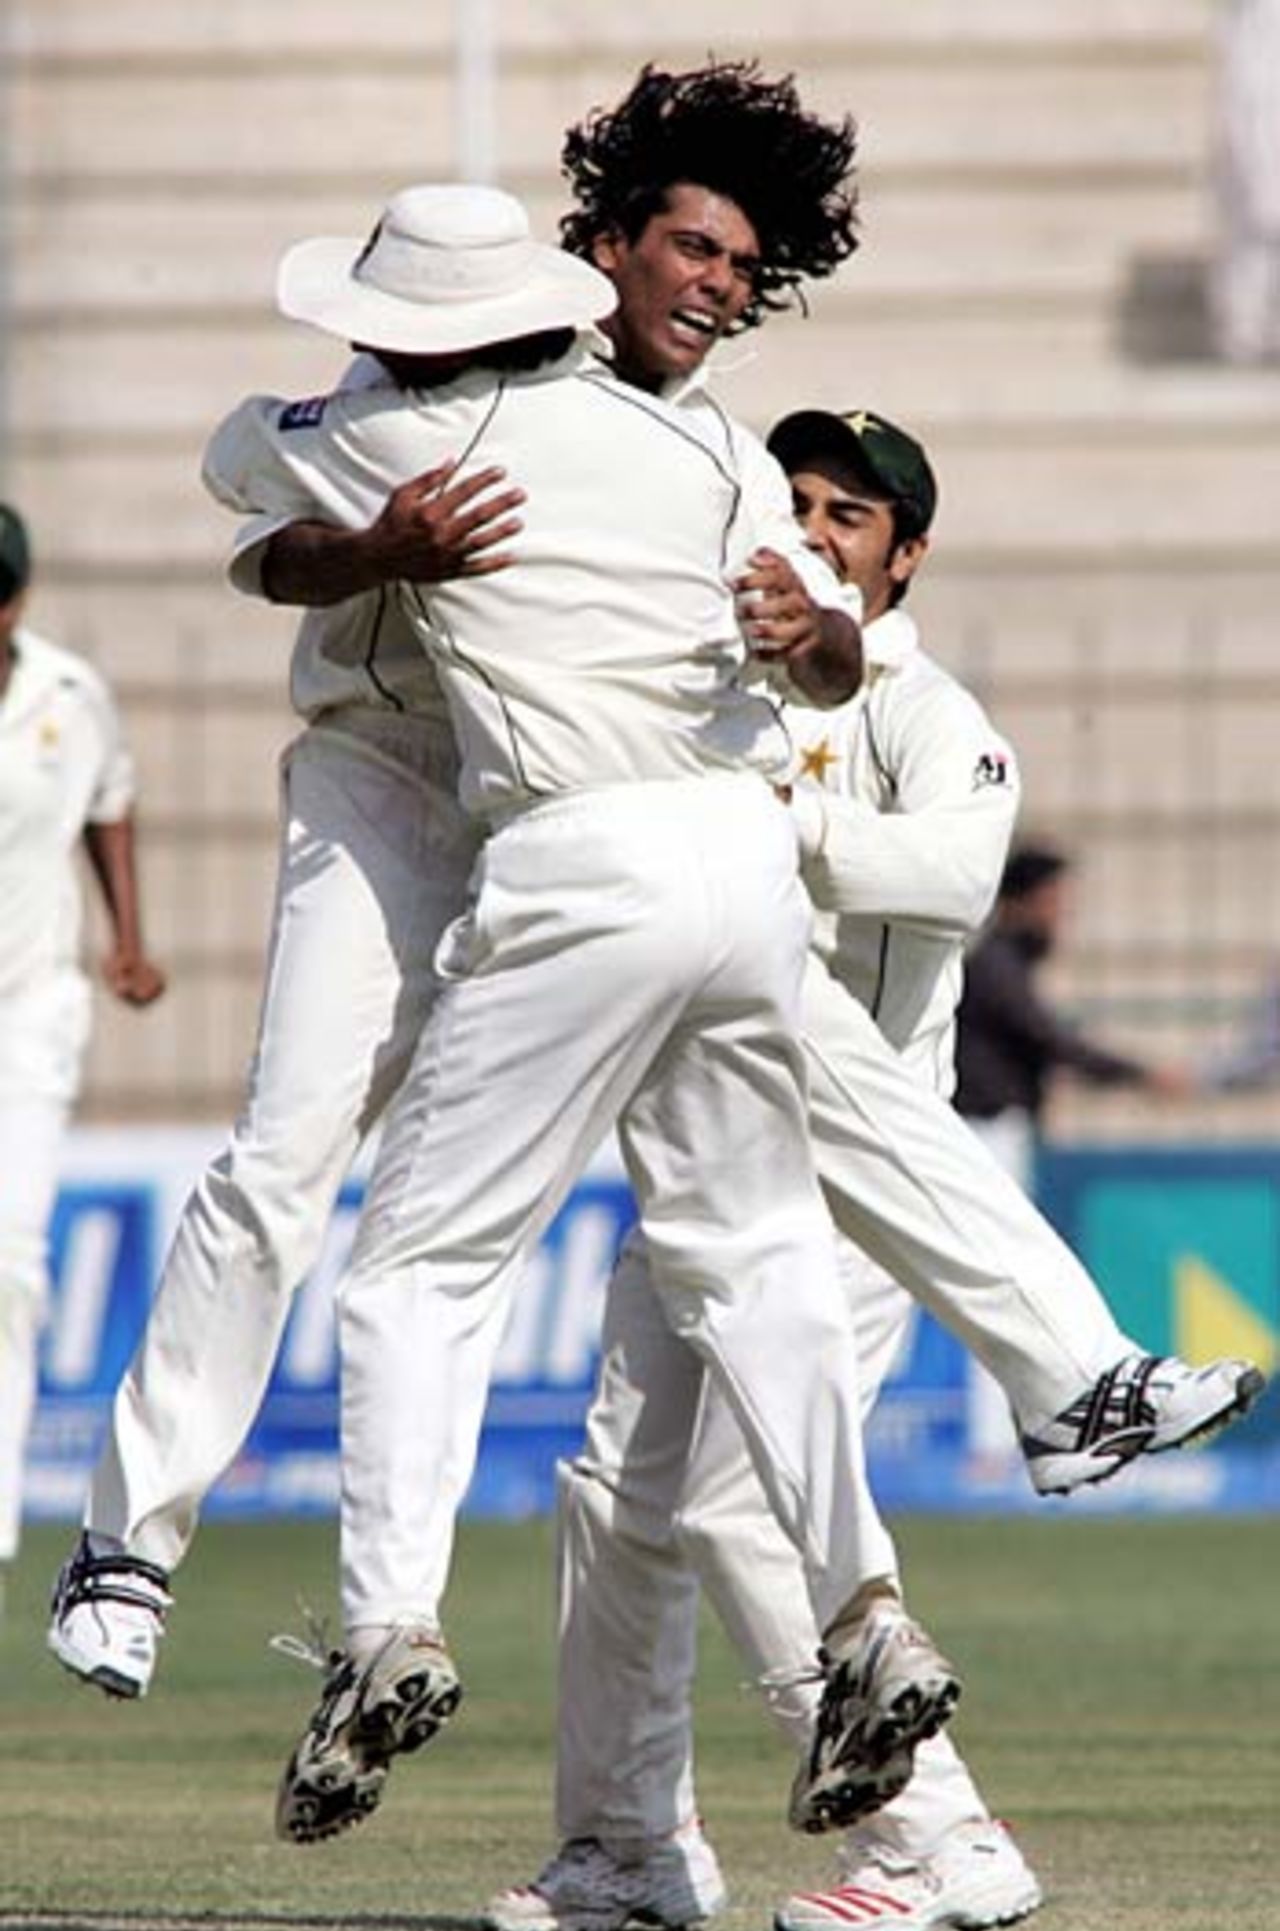 Mohammad Sami and his hair celebrate after dismissing Kevin Pietersen, Pakistan v England, 1st Test, Multan, November 16, 2005